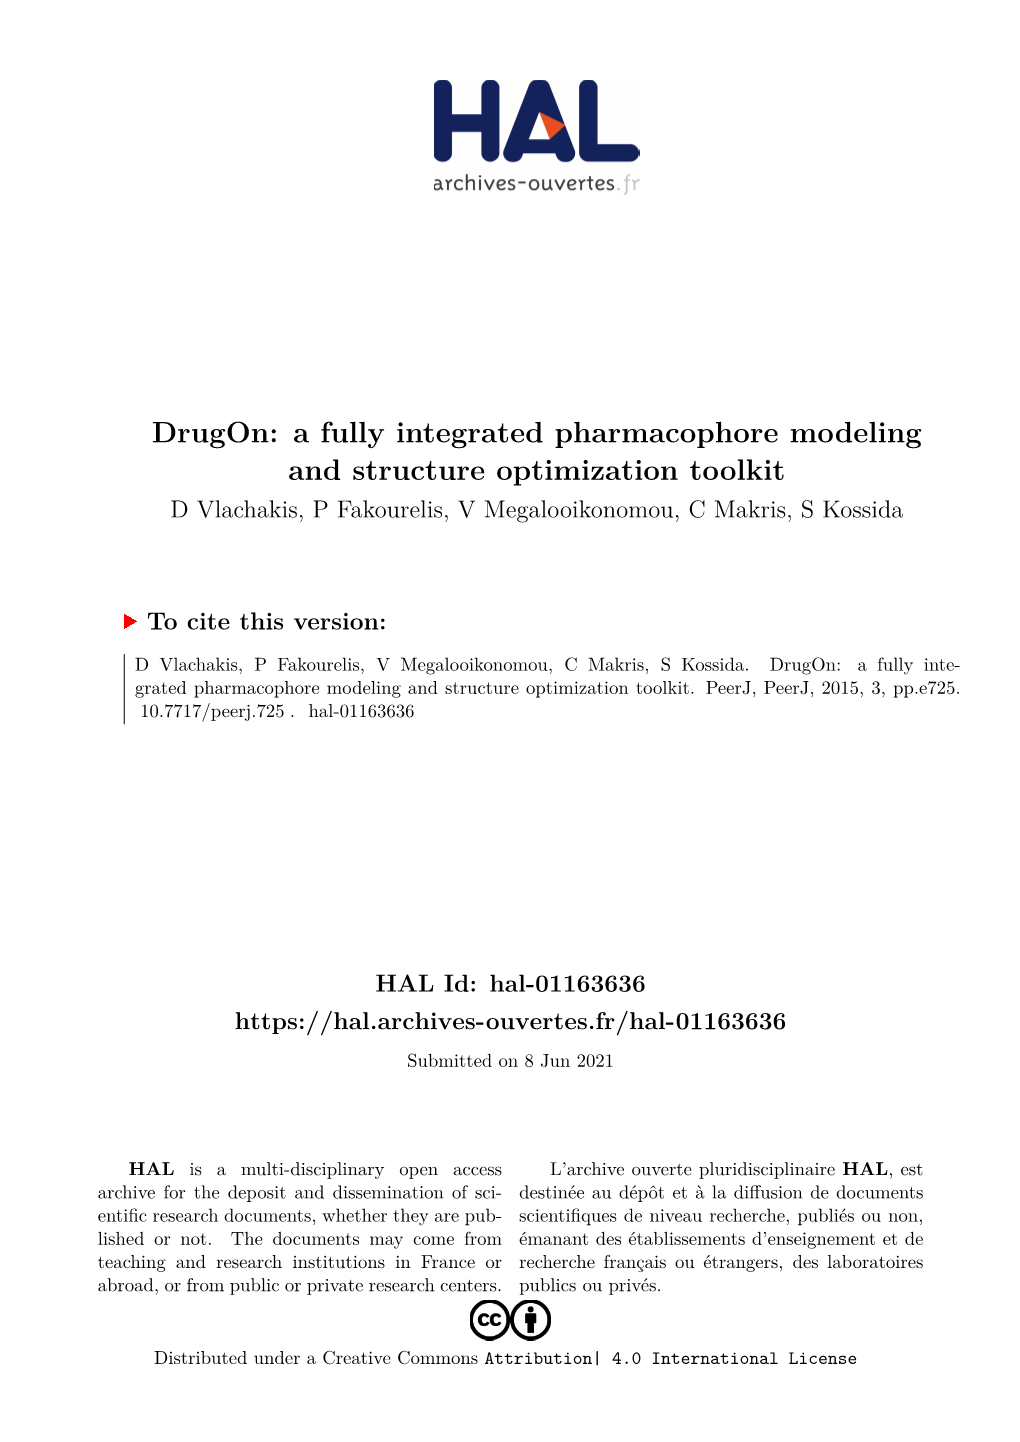 A Fully Integrated Pharmacophore Modeling and Structure Optimization Toolkit D Vlachakis, P Fakourelis, V Megalooikonomou, C Makris, S Kossida